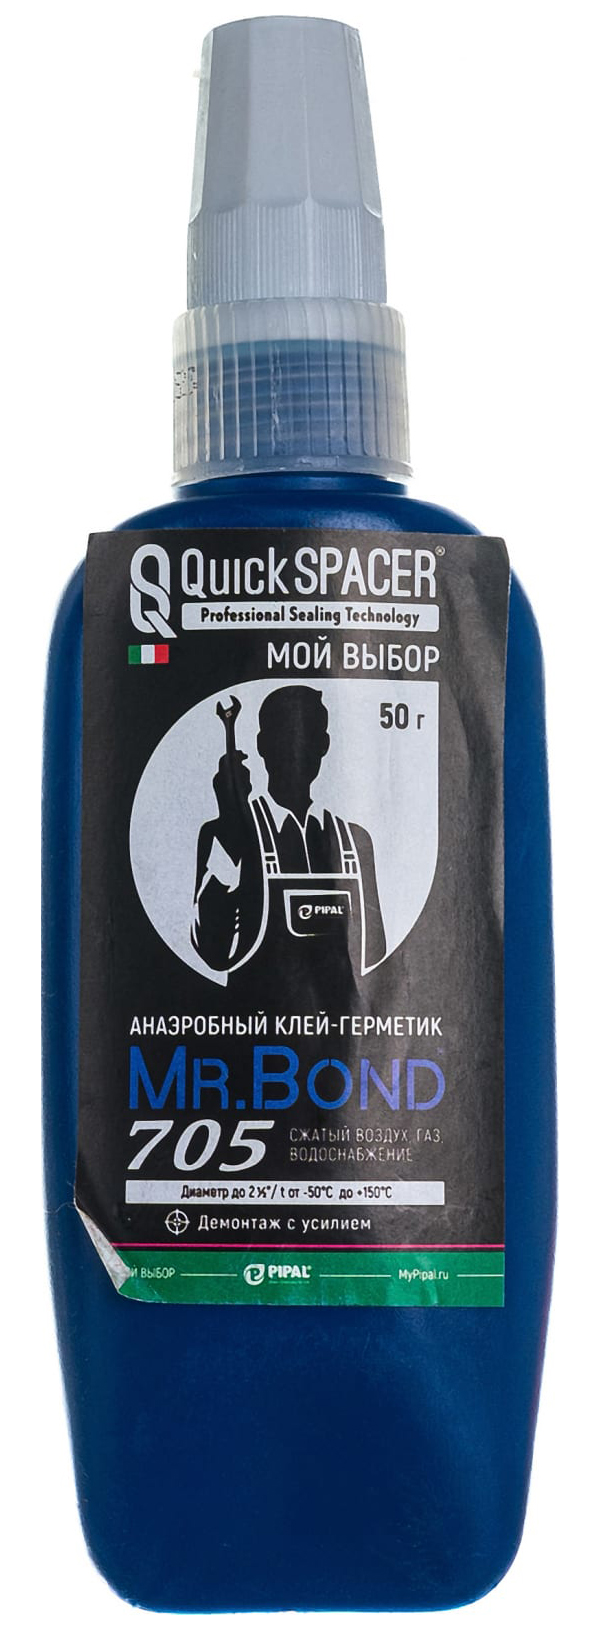 Mr.Bond PIPAL QuickSPACER Тиксотропный анаэробный герметик, быстрый демонтаж, белый, 100г mr bond pipal quickspacer тиксотропный анаэробный герметик быстрый демонтаж белый 100г